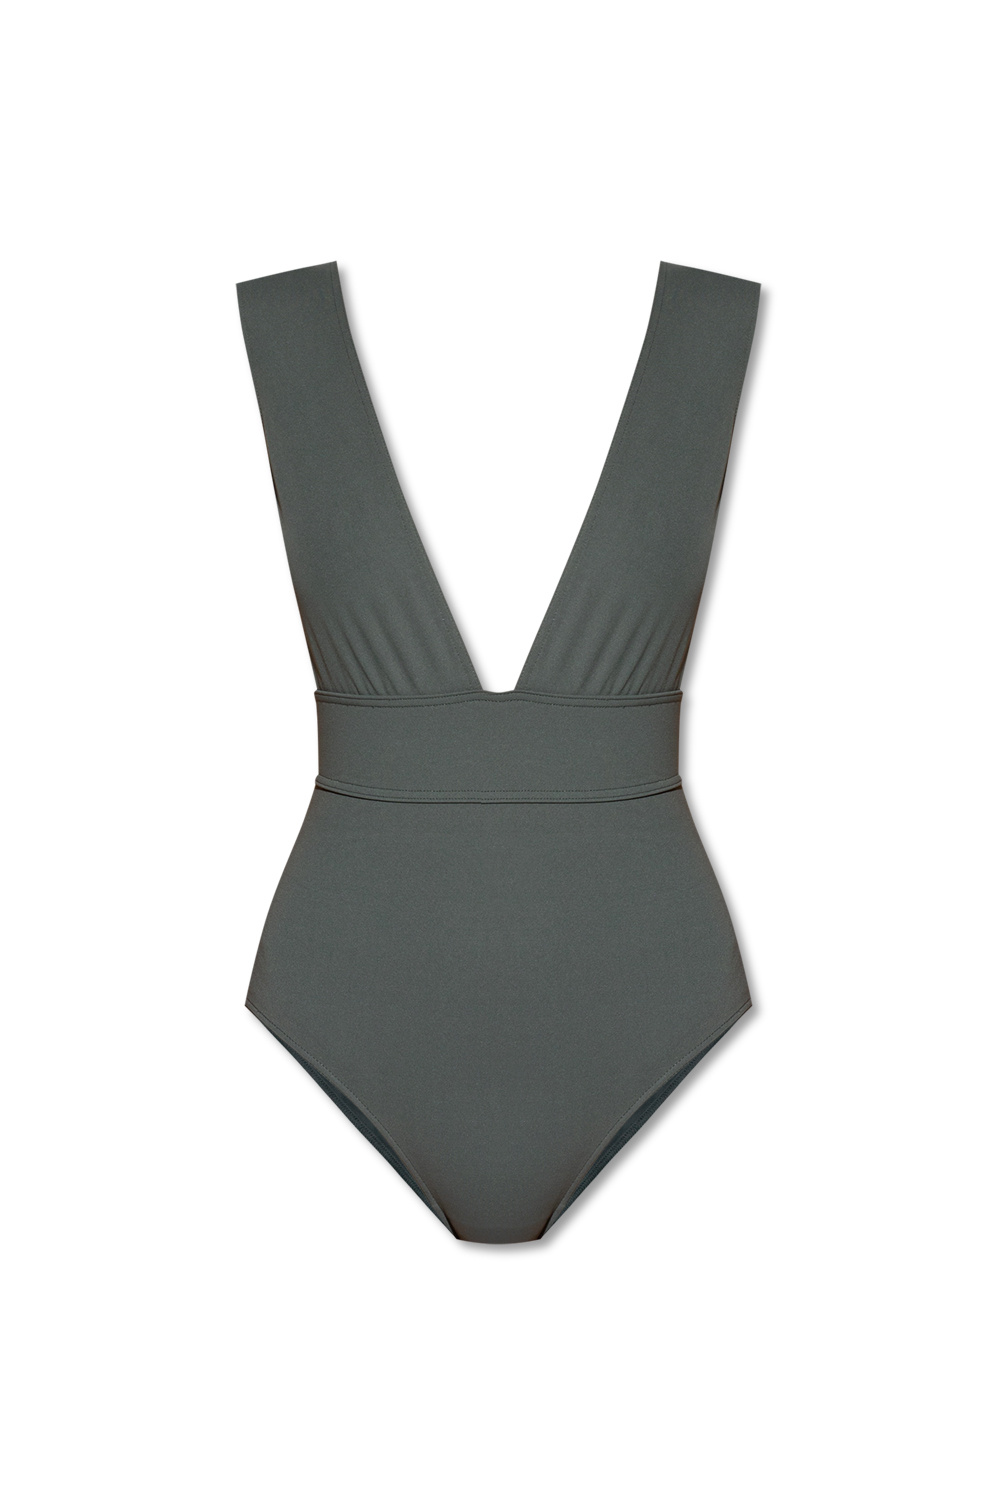 Eres ‘Pigment’ one-piece swimsuit